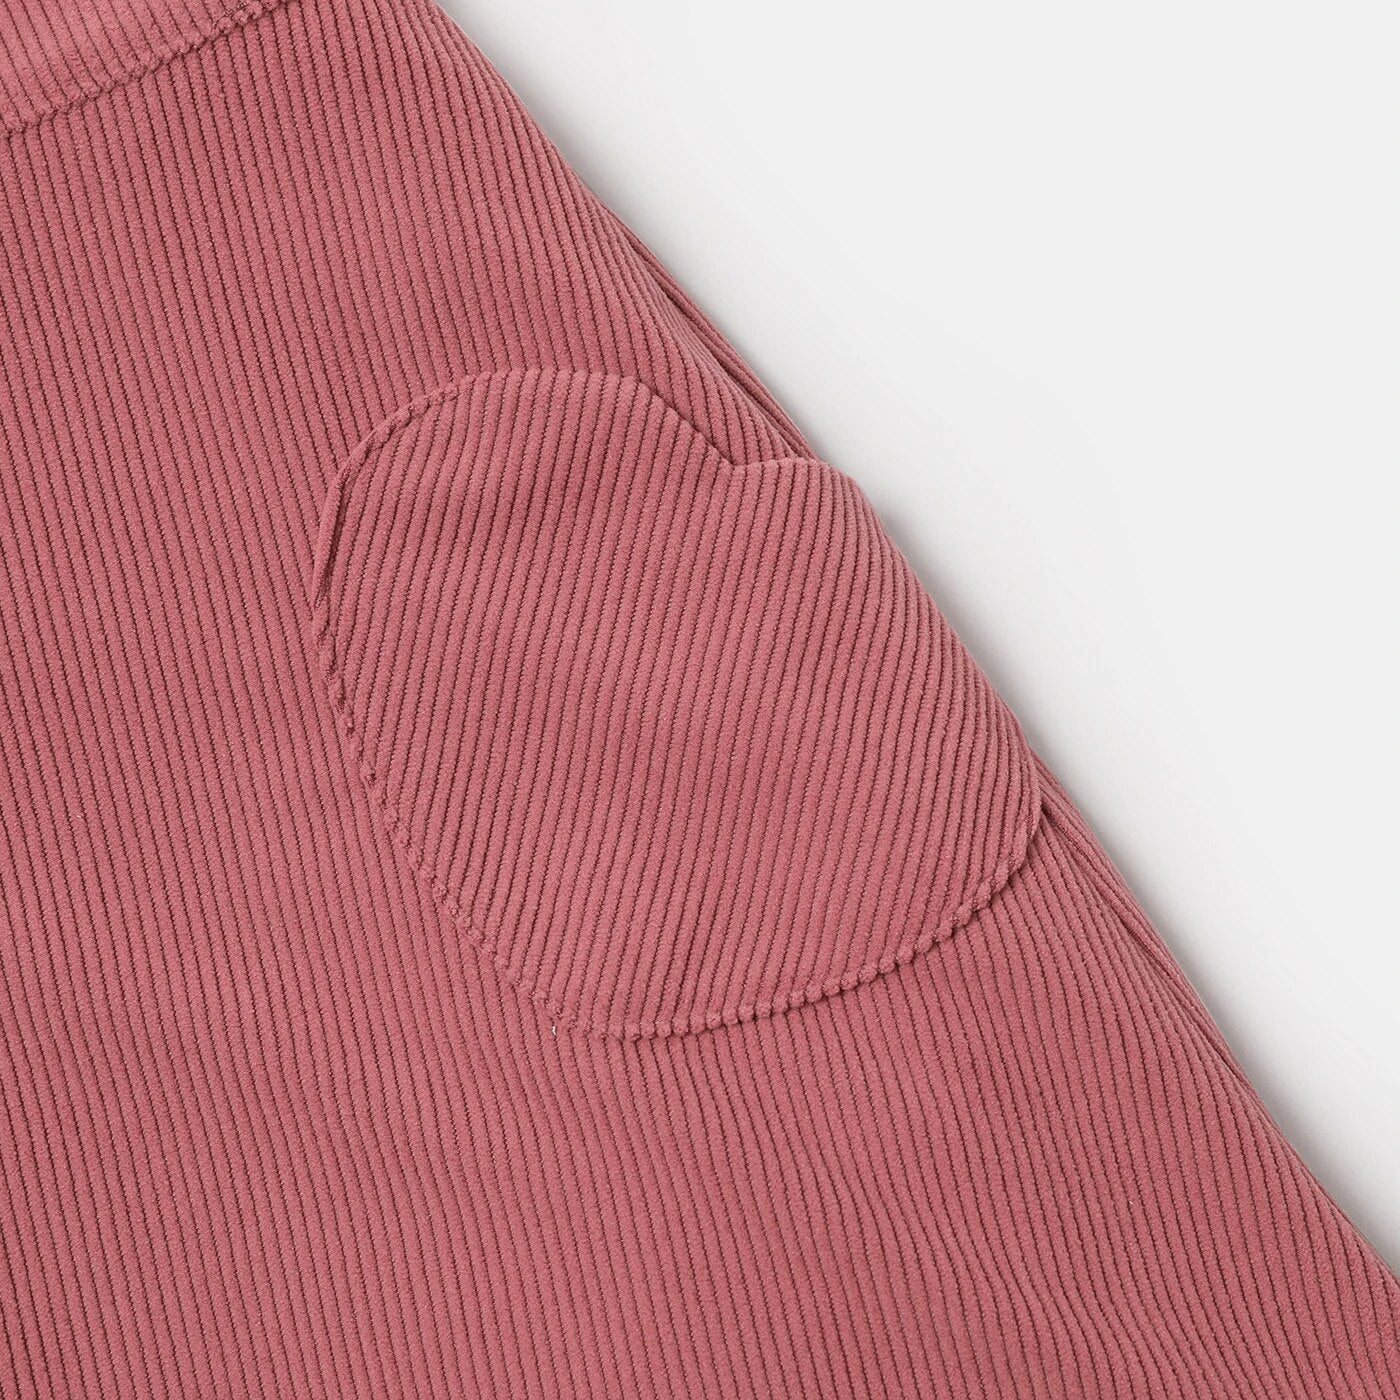 2 Piece Kids Girl's Button Design Mock Neck Long-sleeve Tee and Pocket Design Skirt Set The Clothing Company Sydney